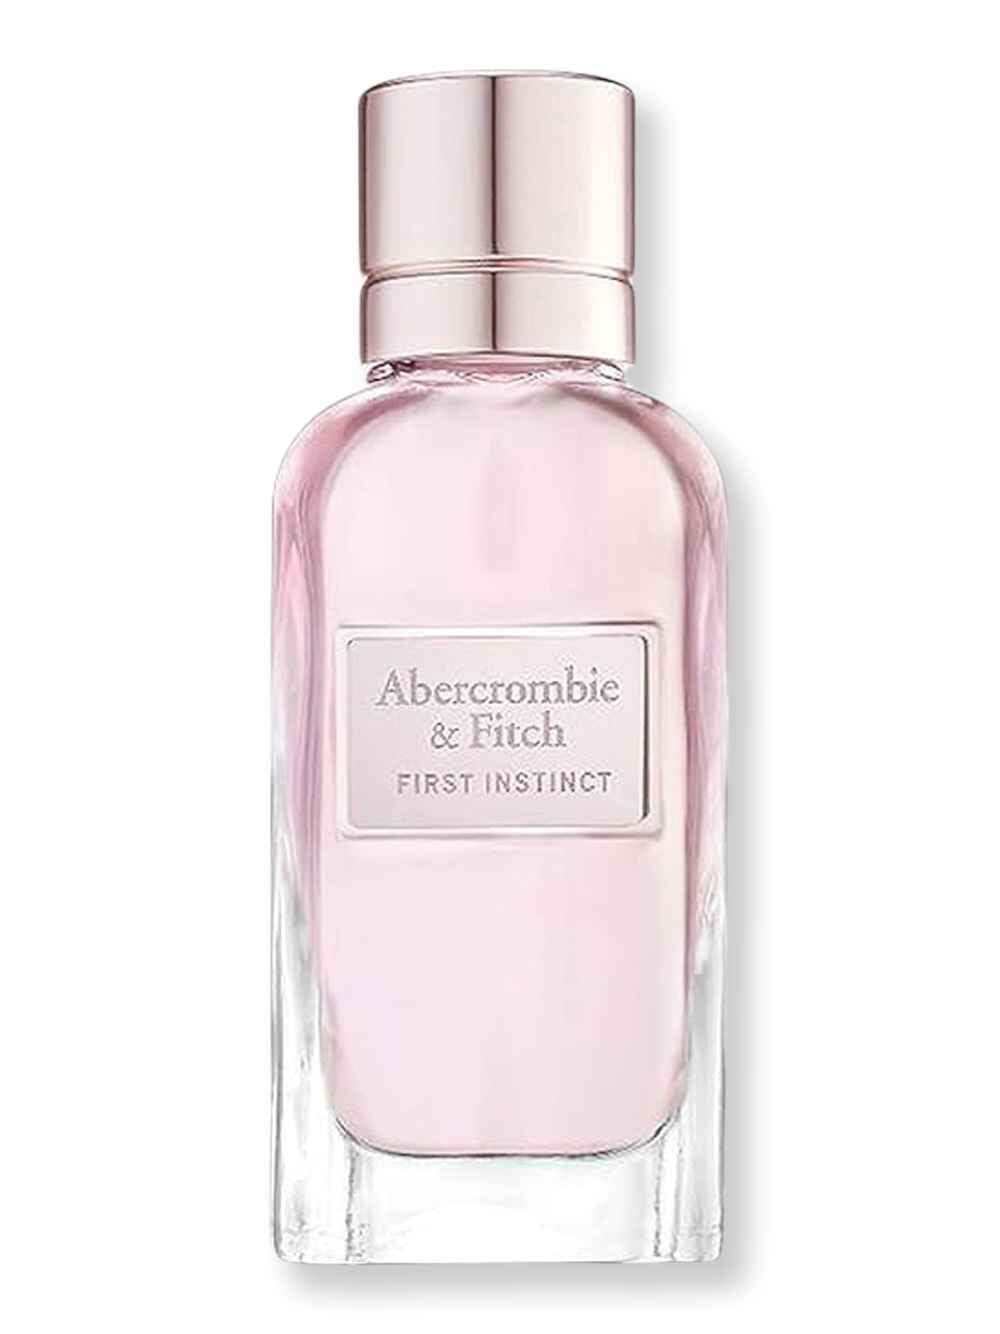 Abercrombie & Fitch Abercrombie & Fitch First Instinct EDP Spray 1 oz30 ml Perfume 